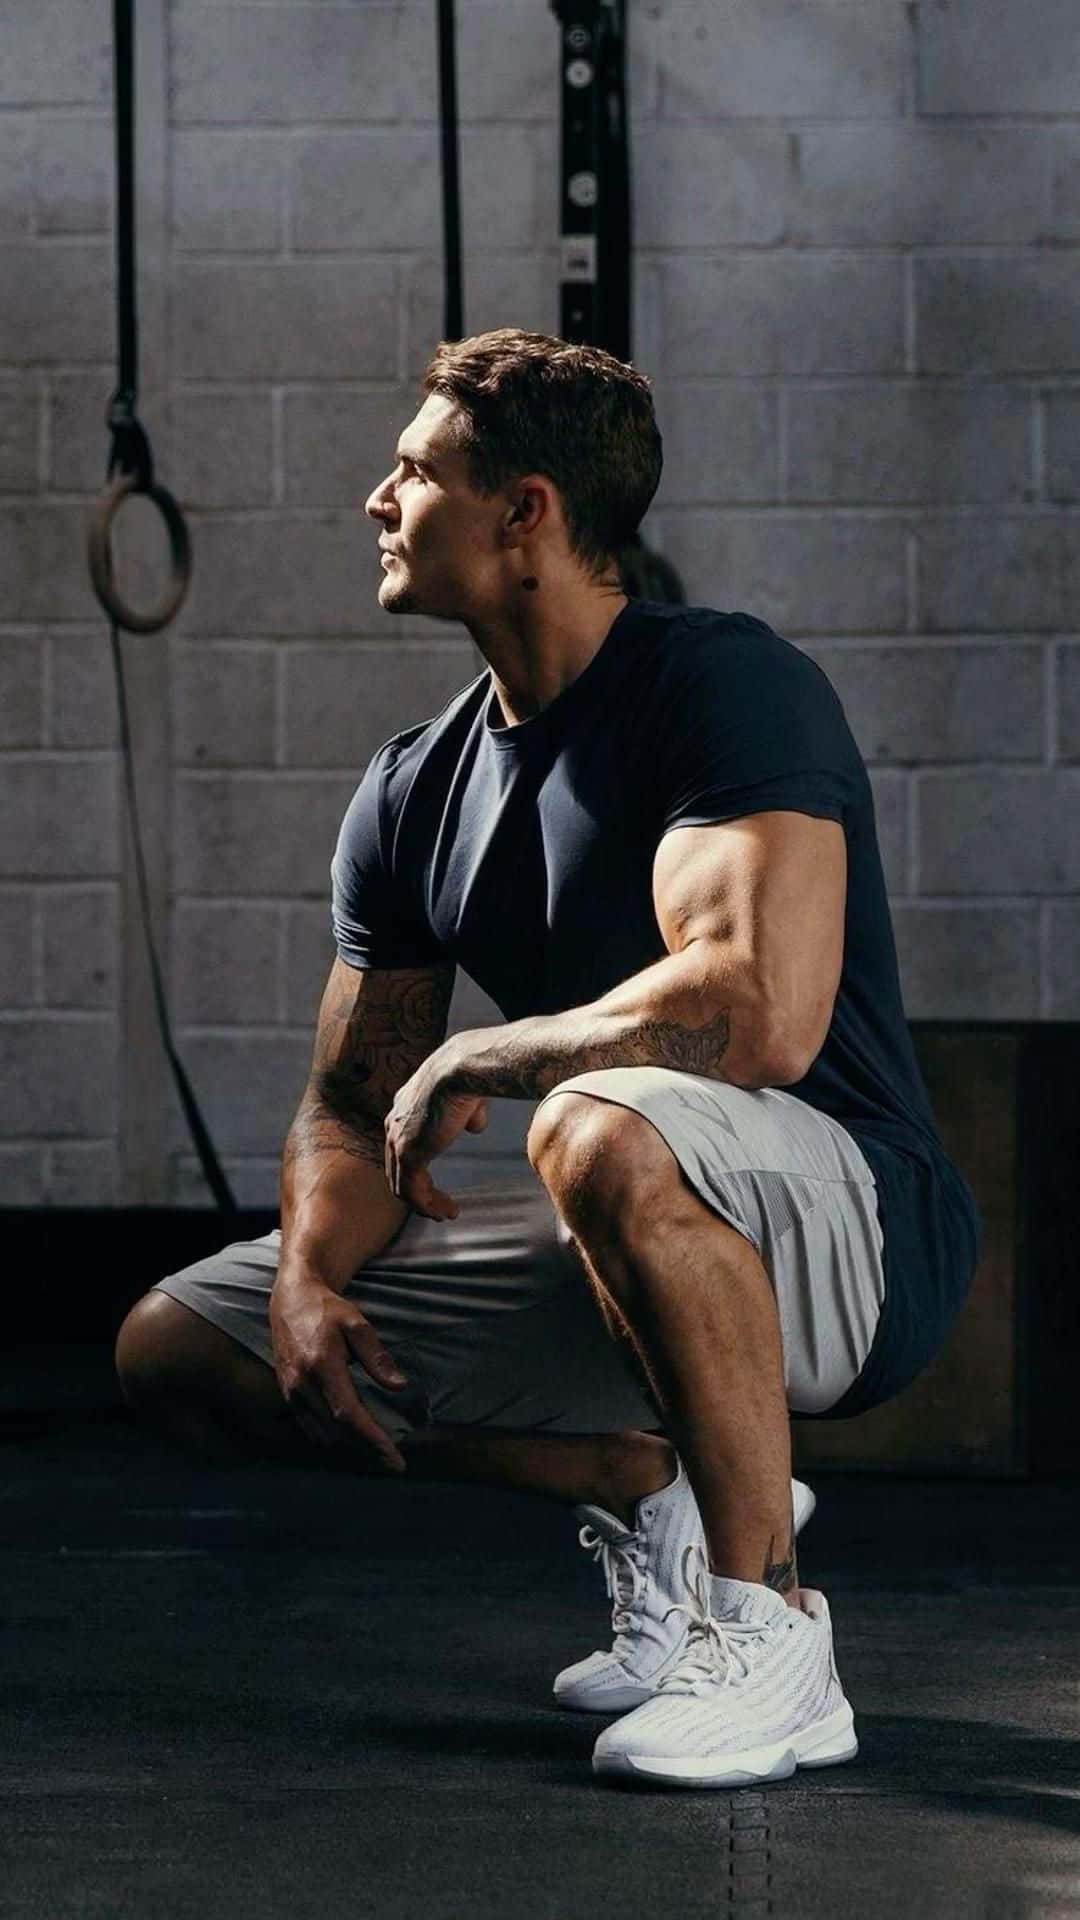 a man squatting down in a gym Wallpaper